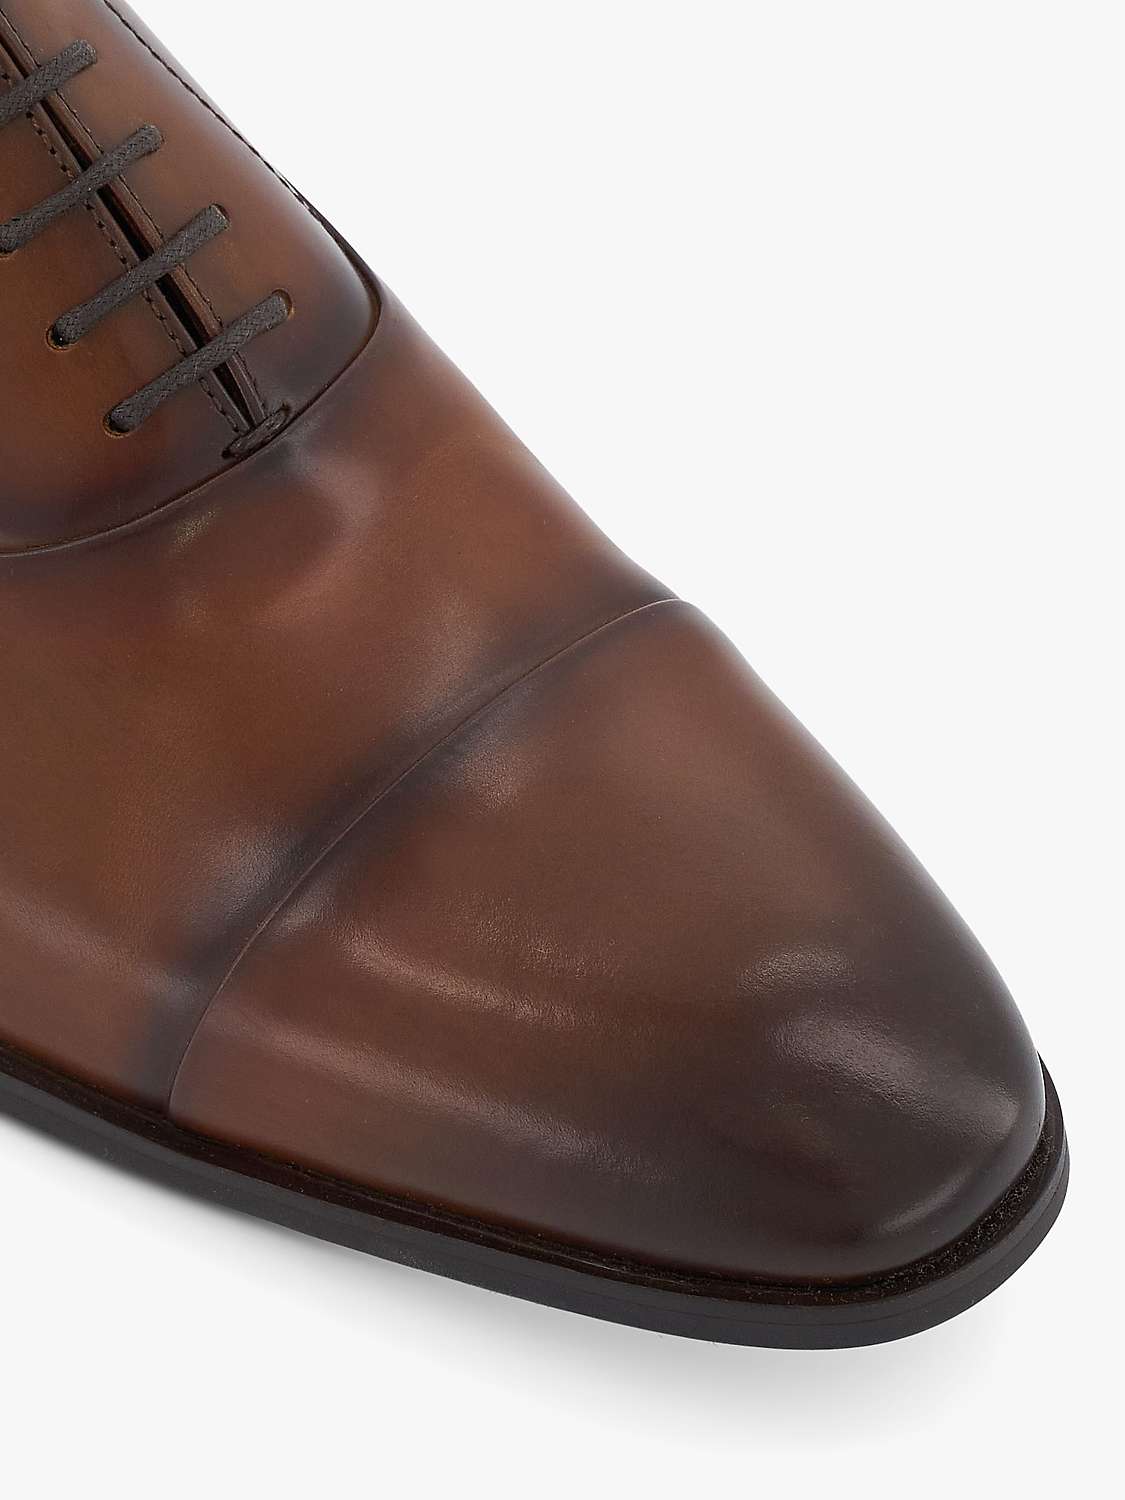 Buy Dune Wide Fit Secrecy Leather Toecap Oxford Shoes, Dark Tan Online at johnlewis.com